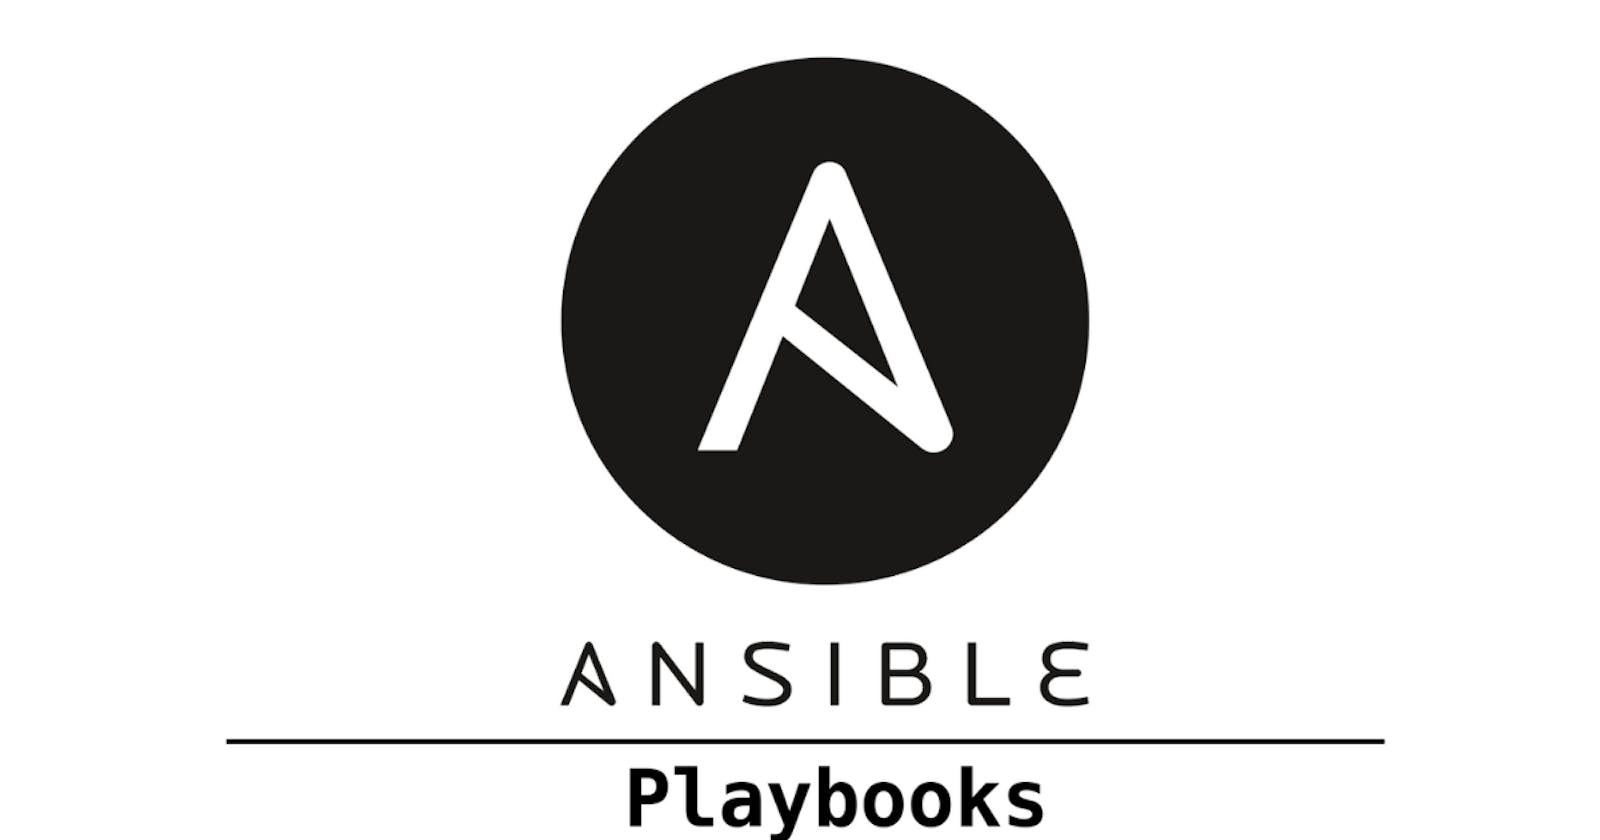 Ansible Playbooks